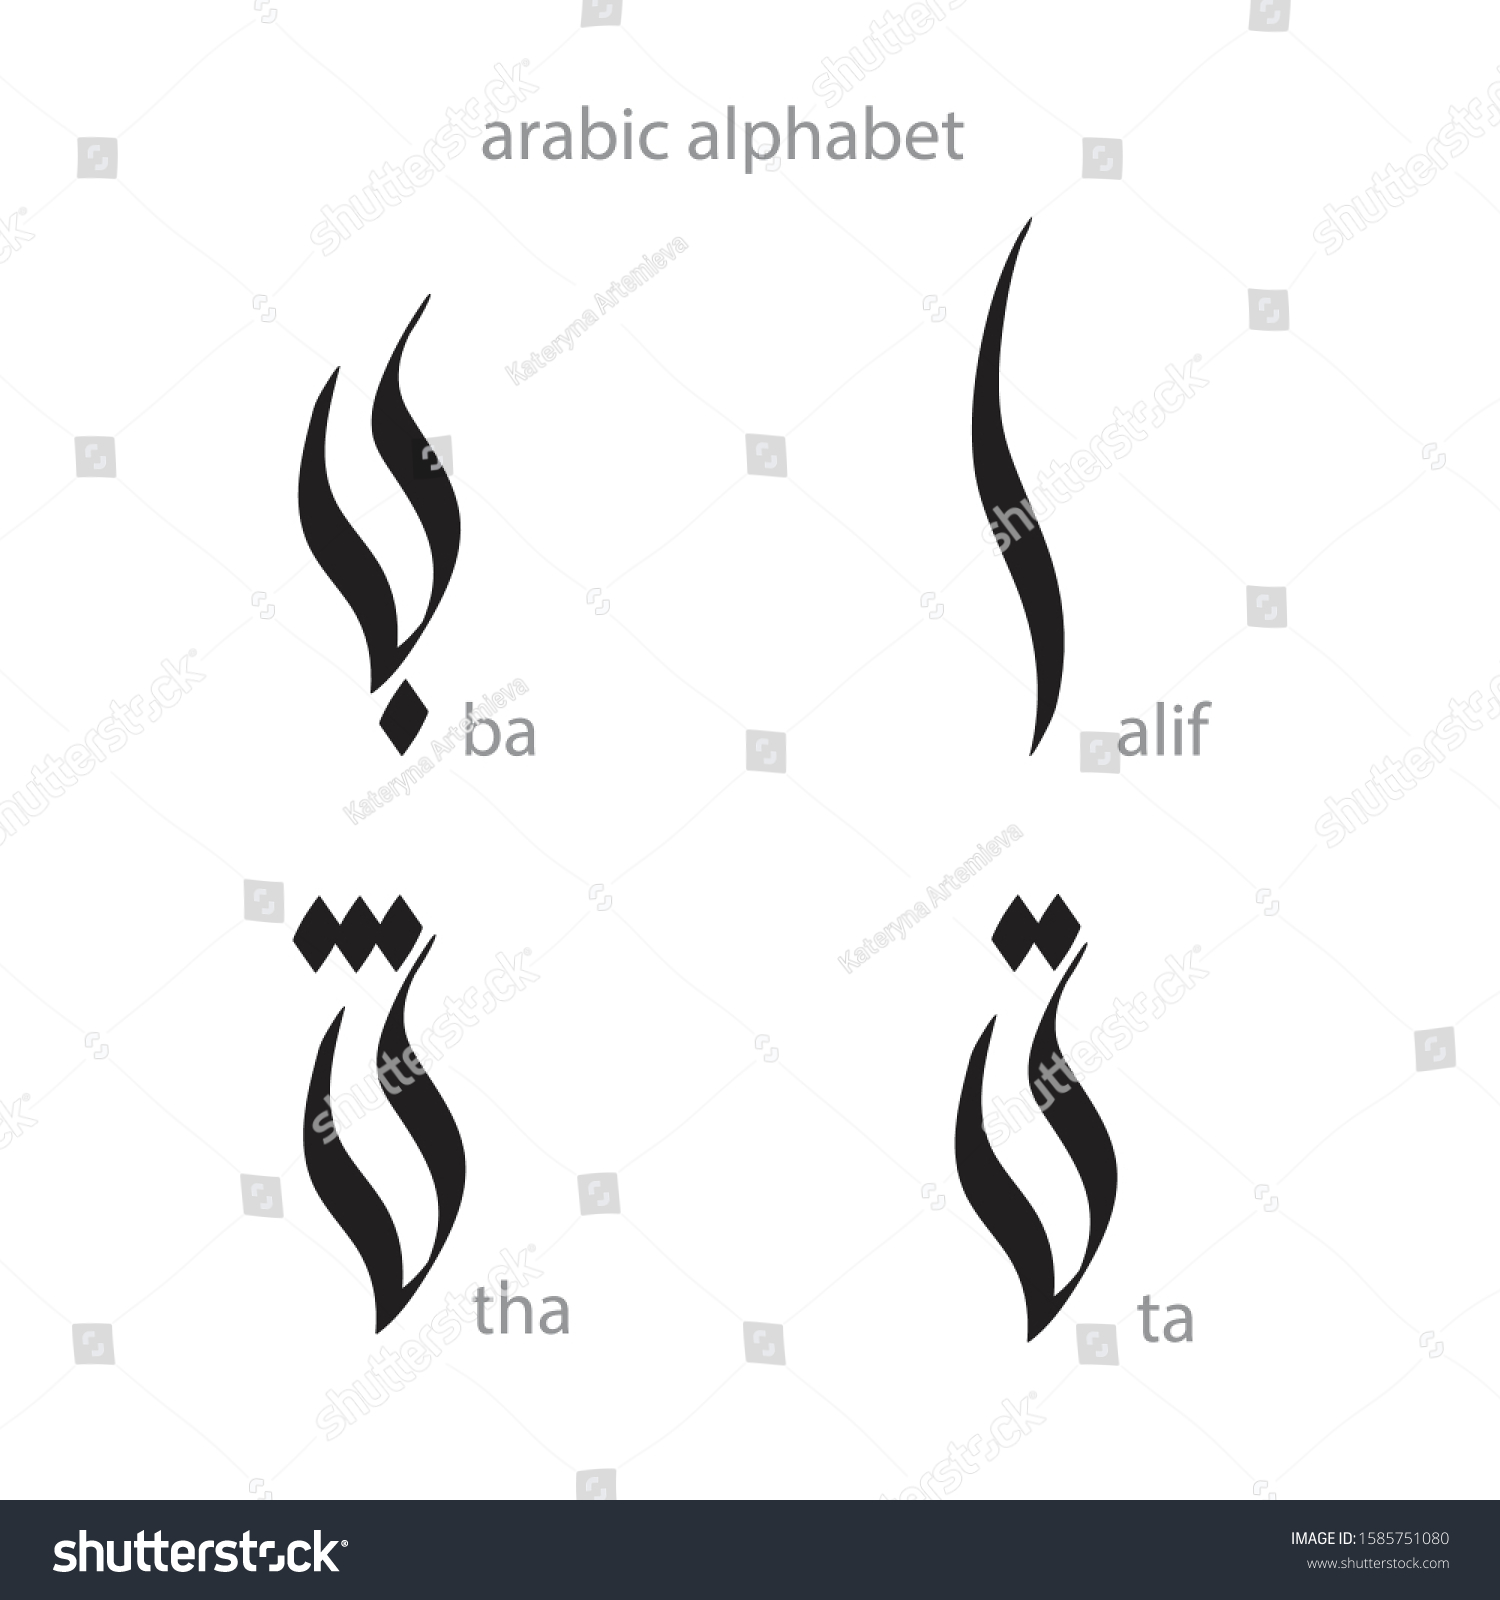 Arabic Alphabet Letters Calligraphy Transcription Pronunciation Stock ...